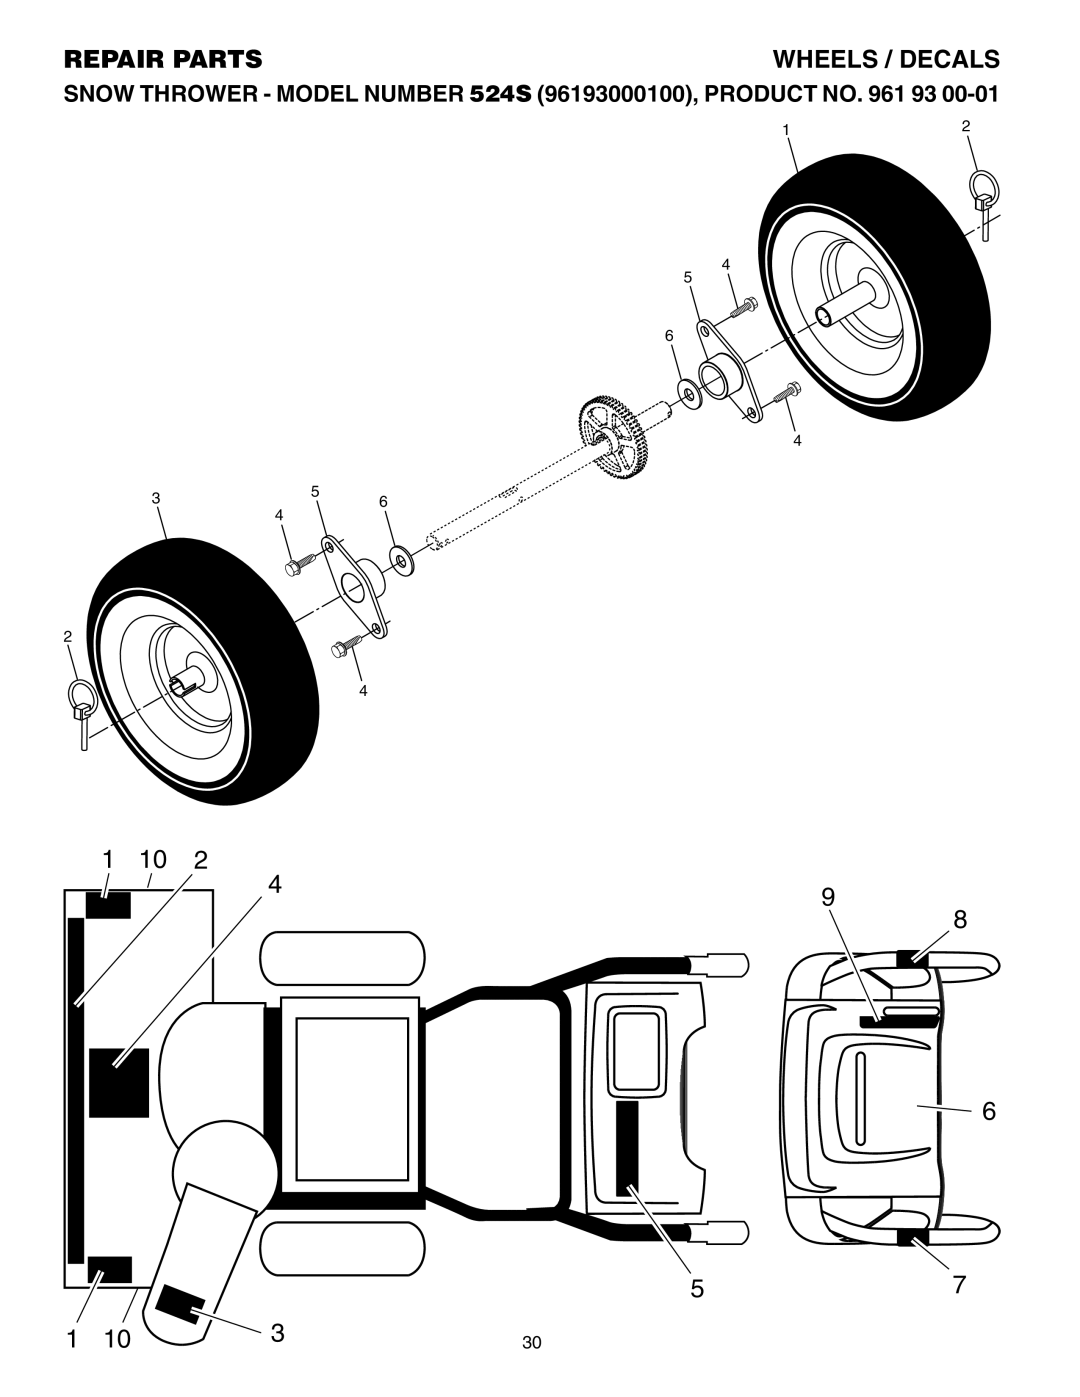 Husqvarna 524S owner manual Wheels / Decals, Repair Parts, 1 10, 8 6 57 